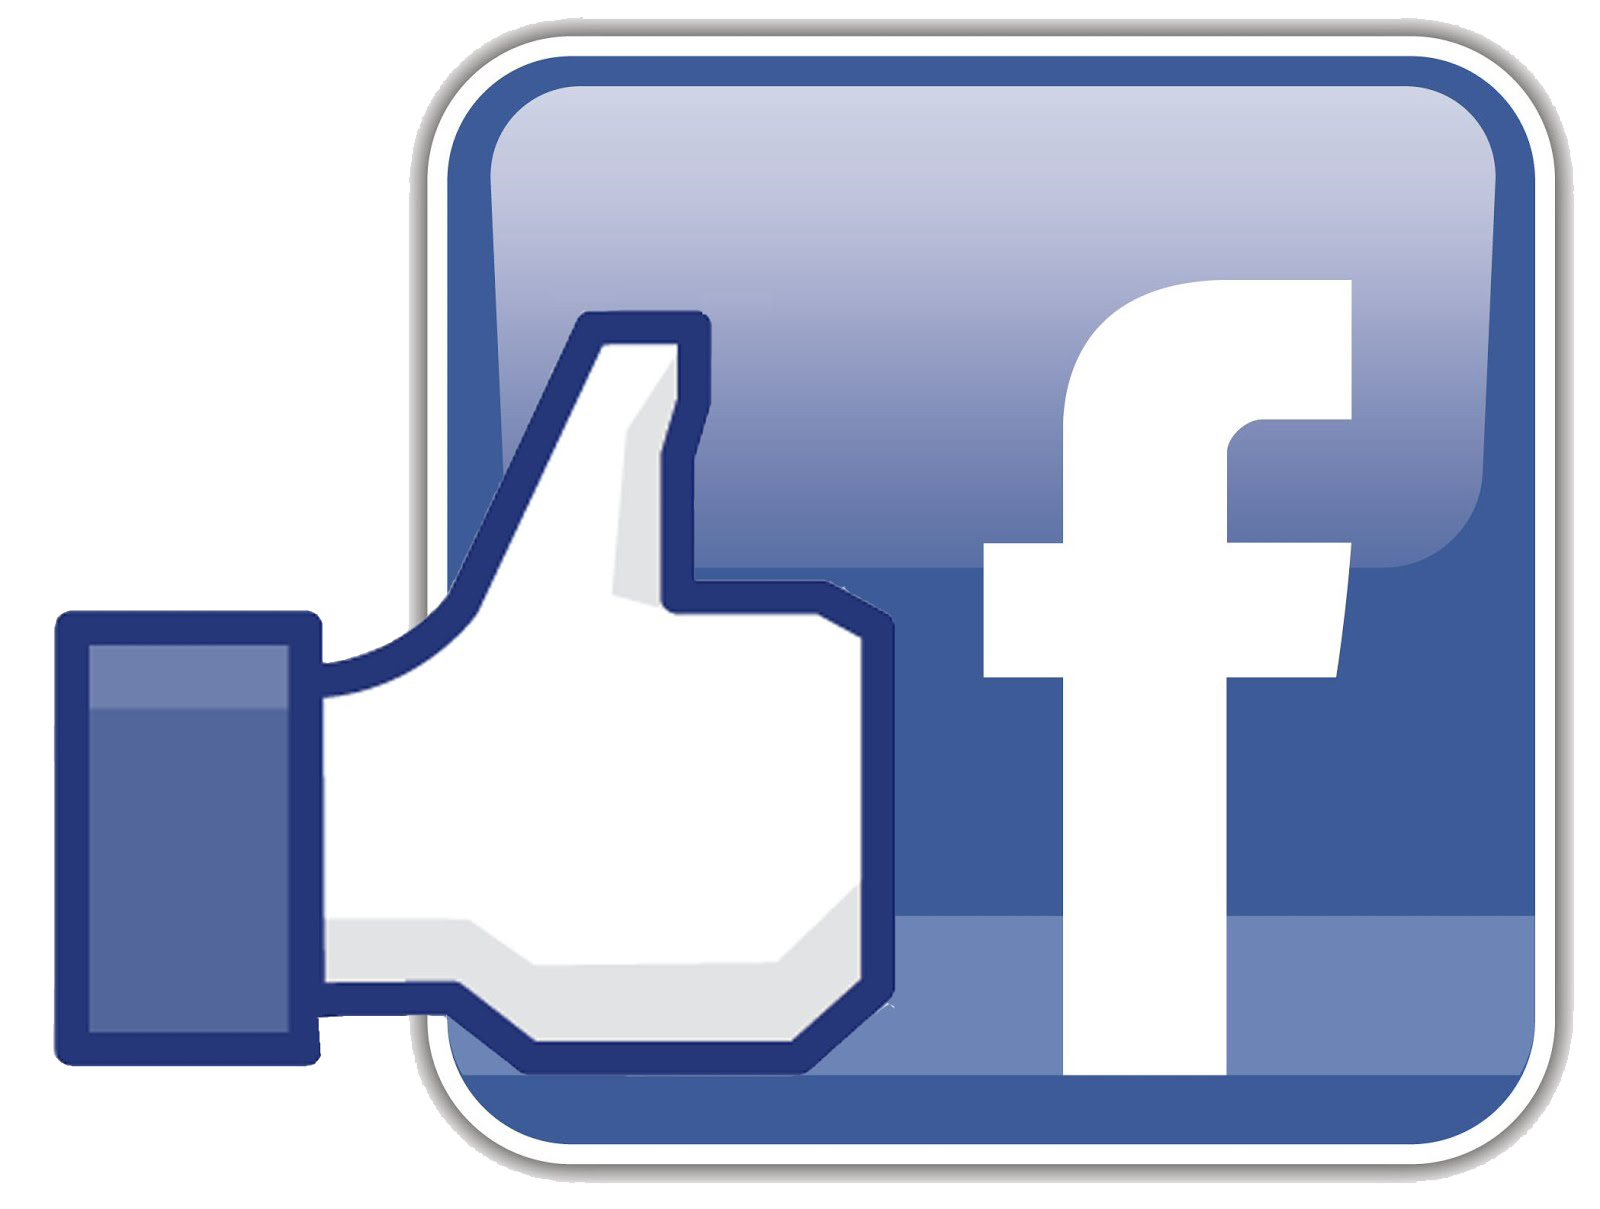 facebook png logo